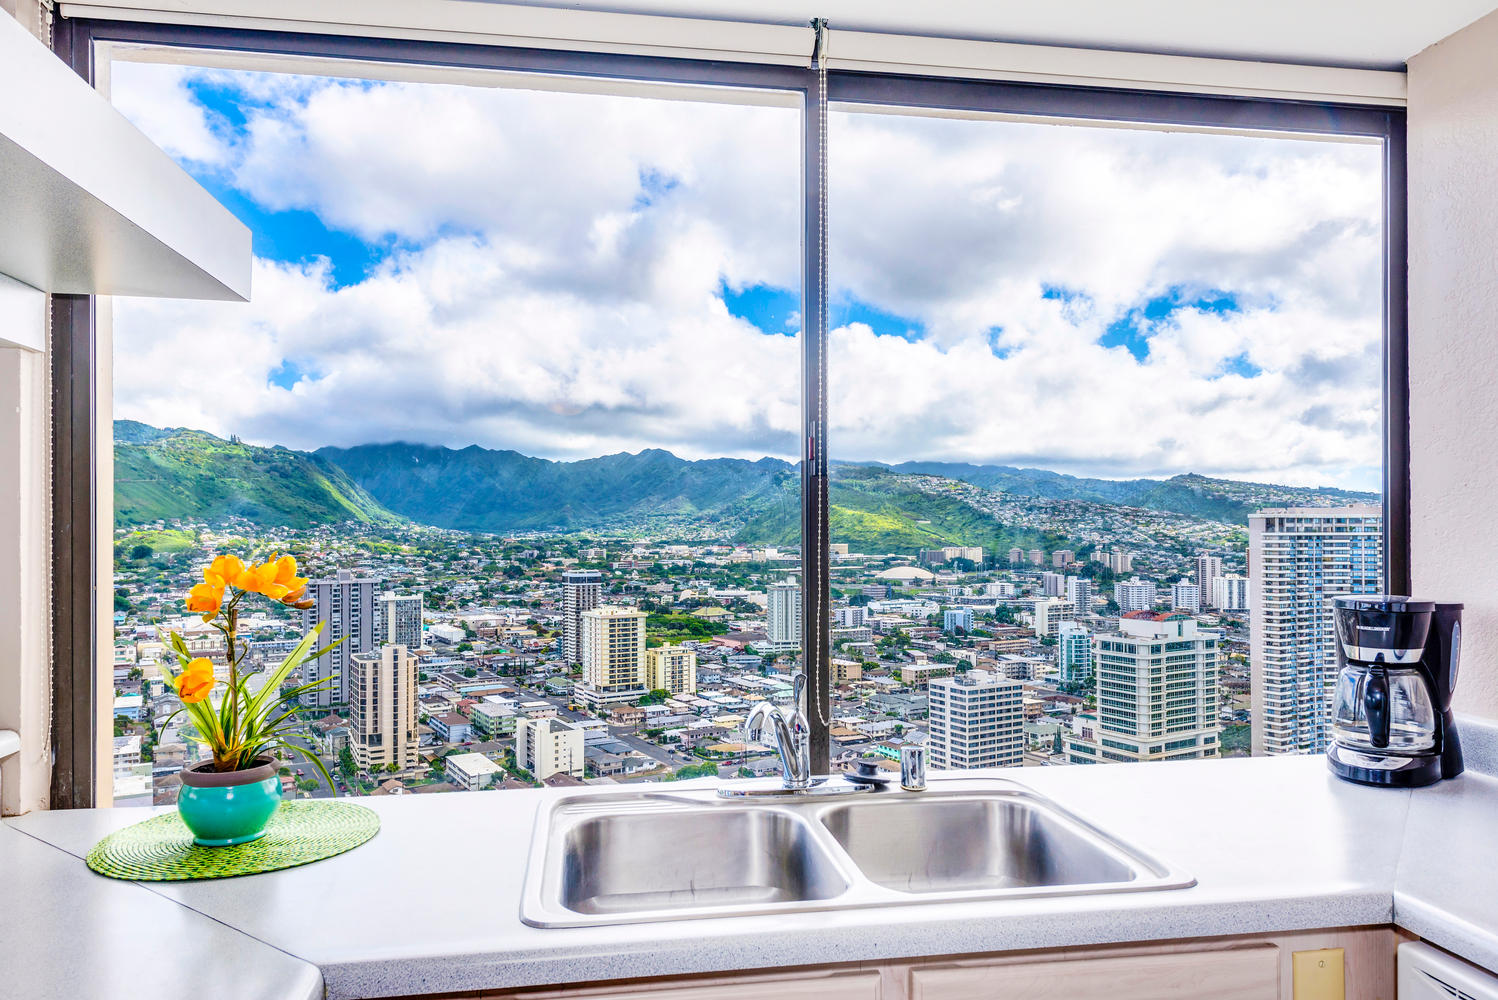 Penthouse104 Waikiki Hawaiian-large-006-Kitchen Sink-1499x1000-72dpi